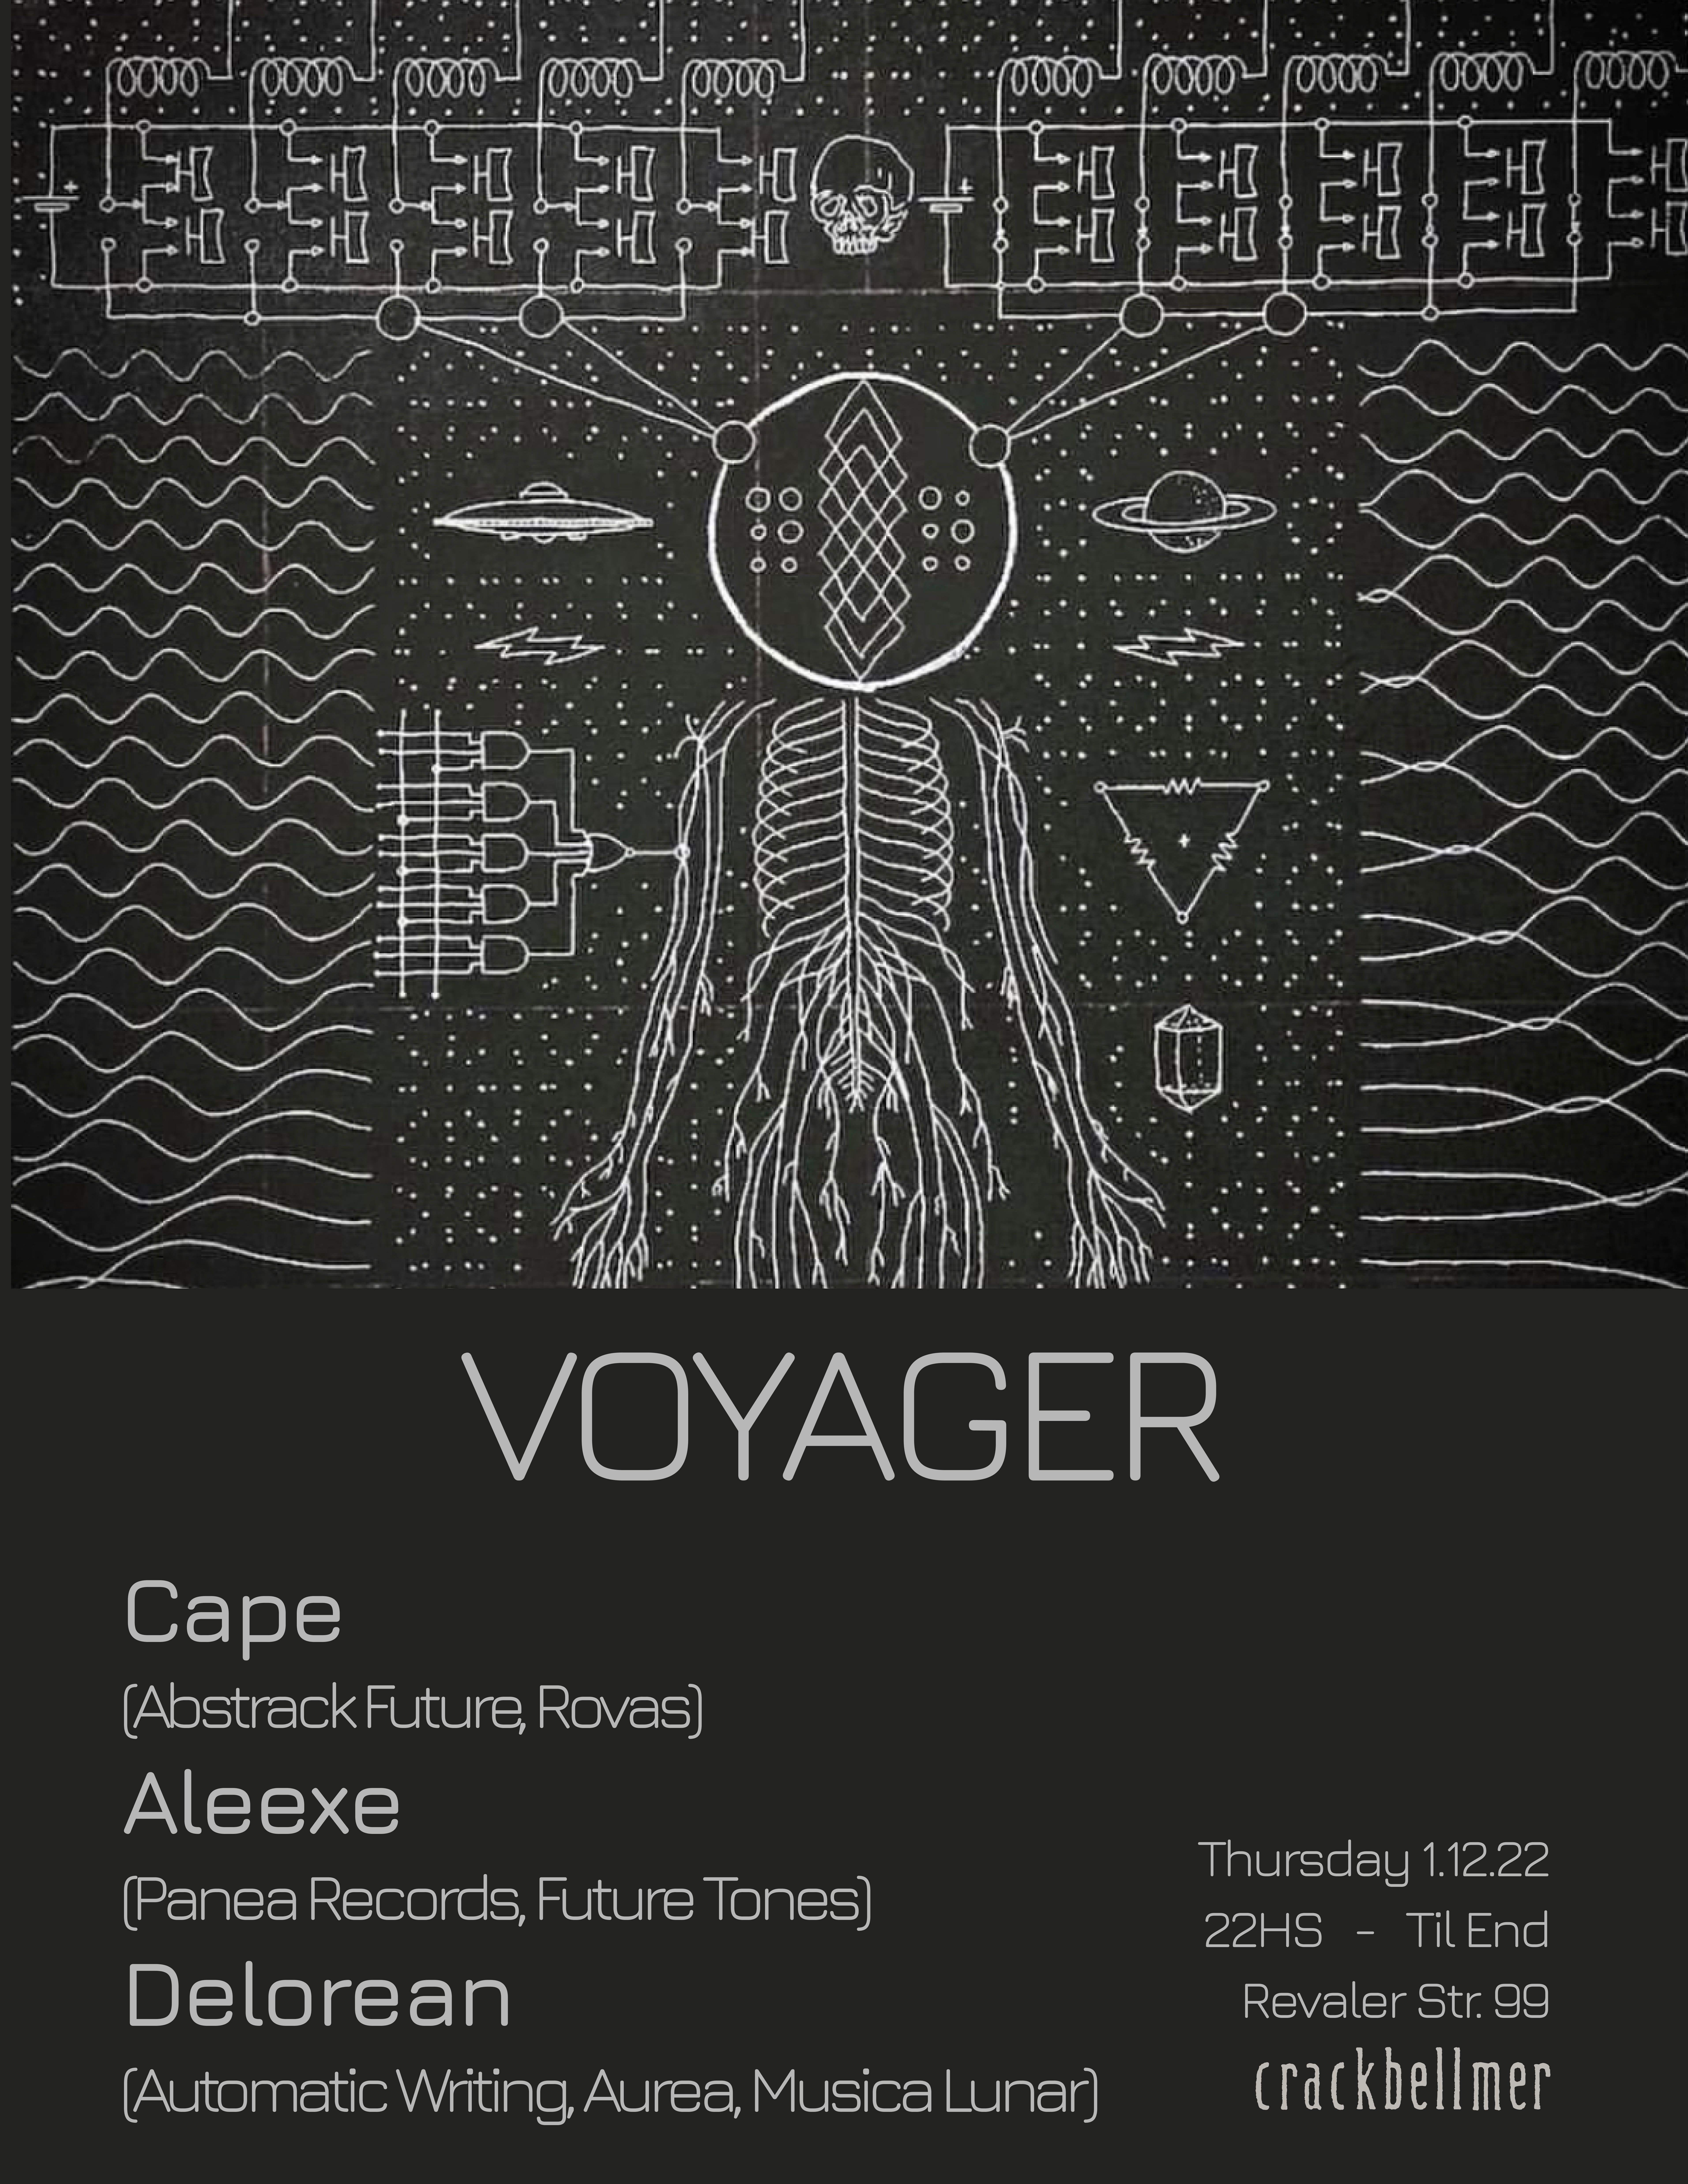 Voyager with Cape, Aleexe, Delorean - フライヤー表